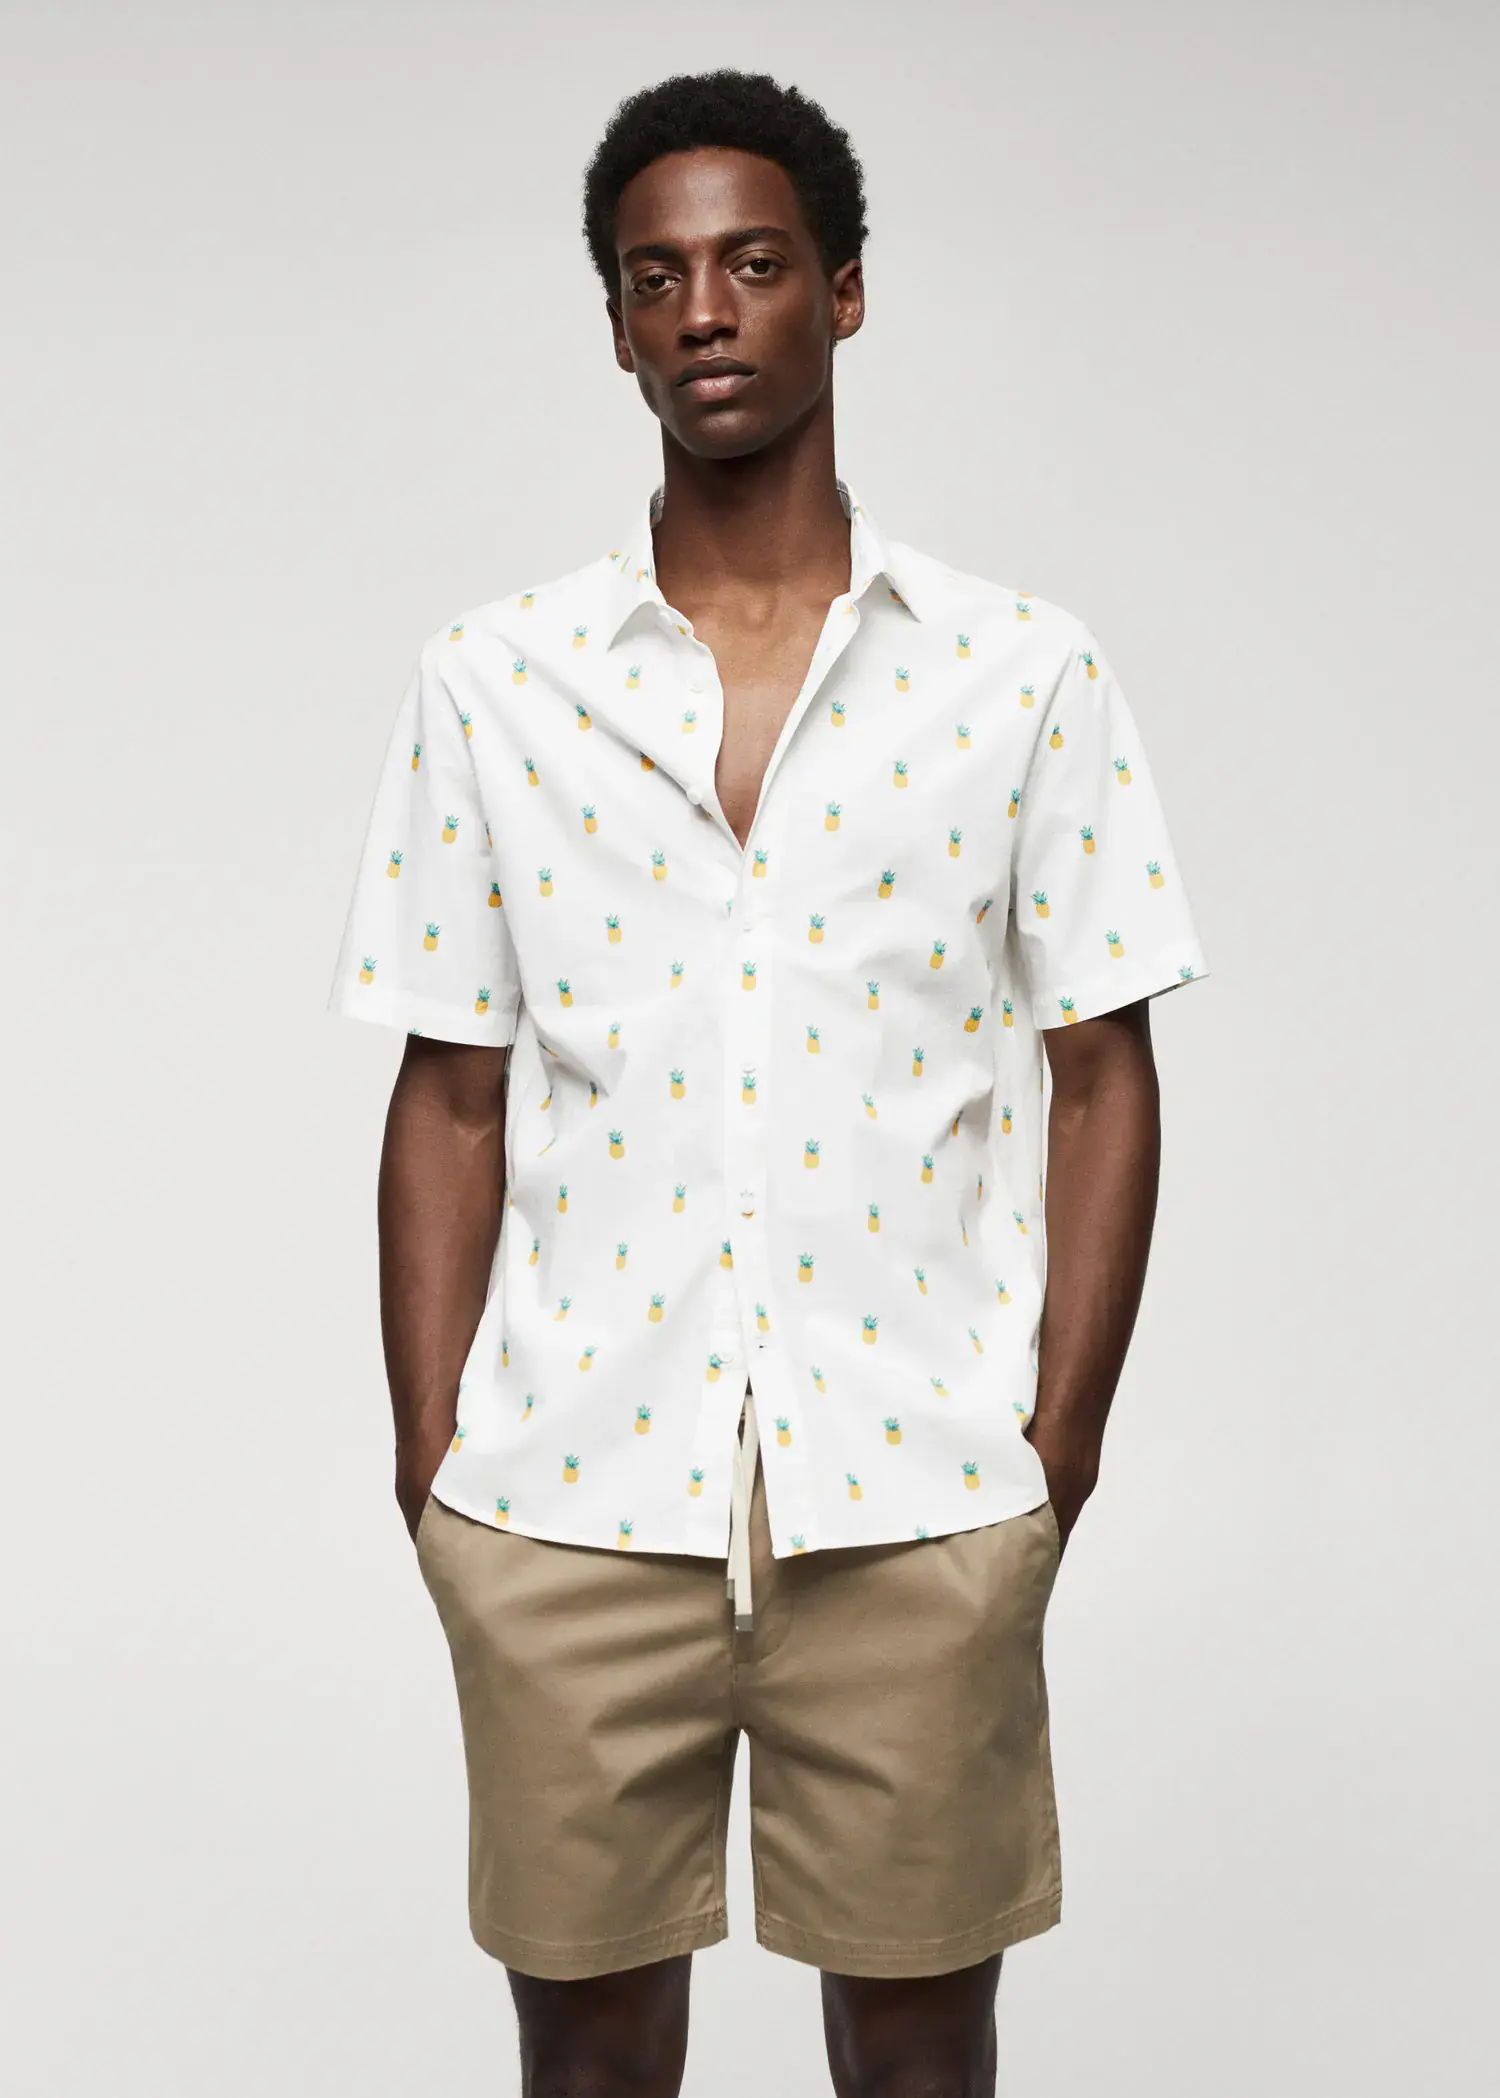 Mango 100% cotton shirt with pineapple print. 1